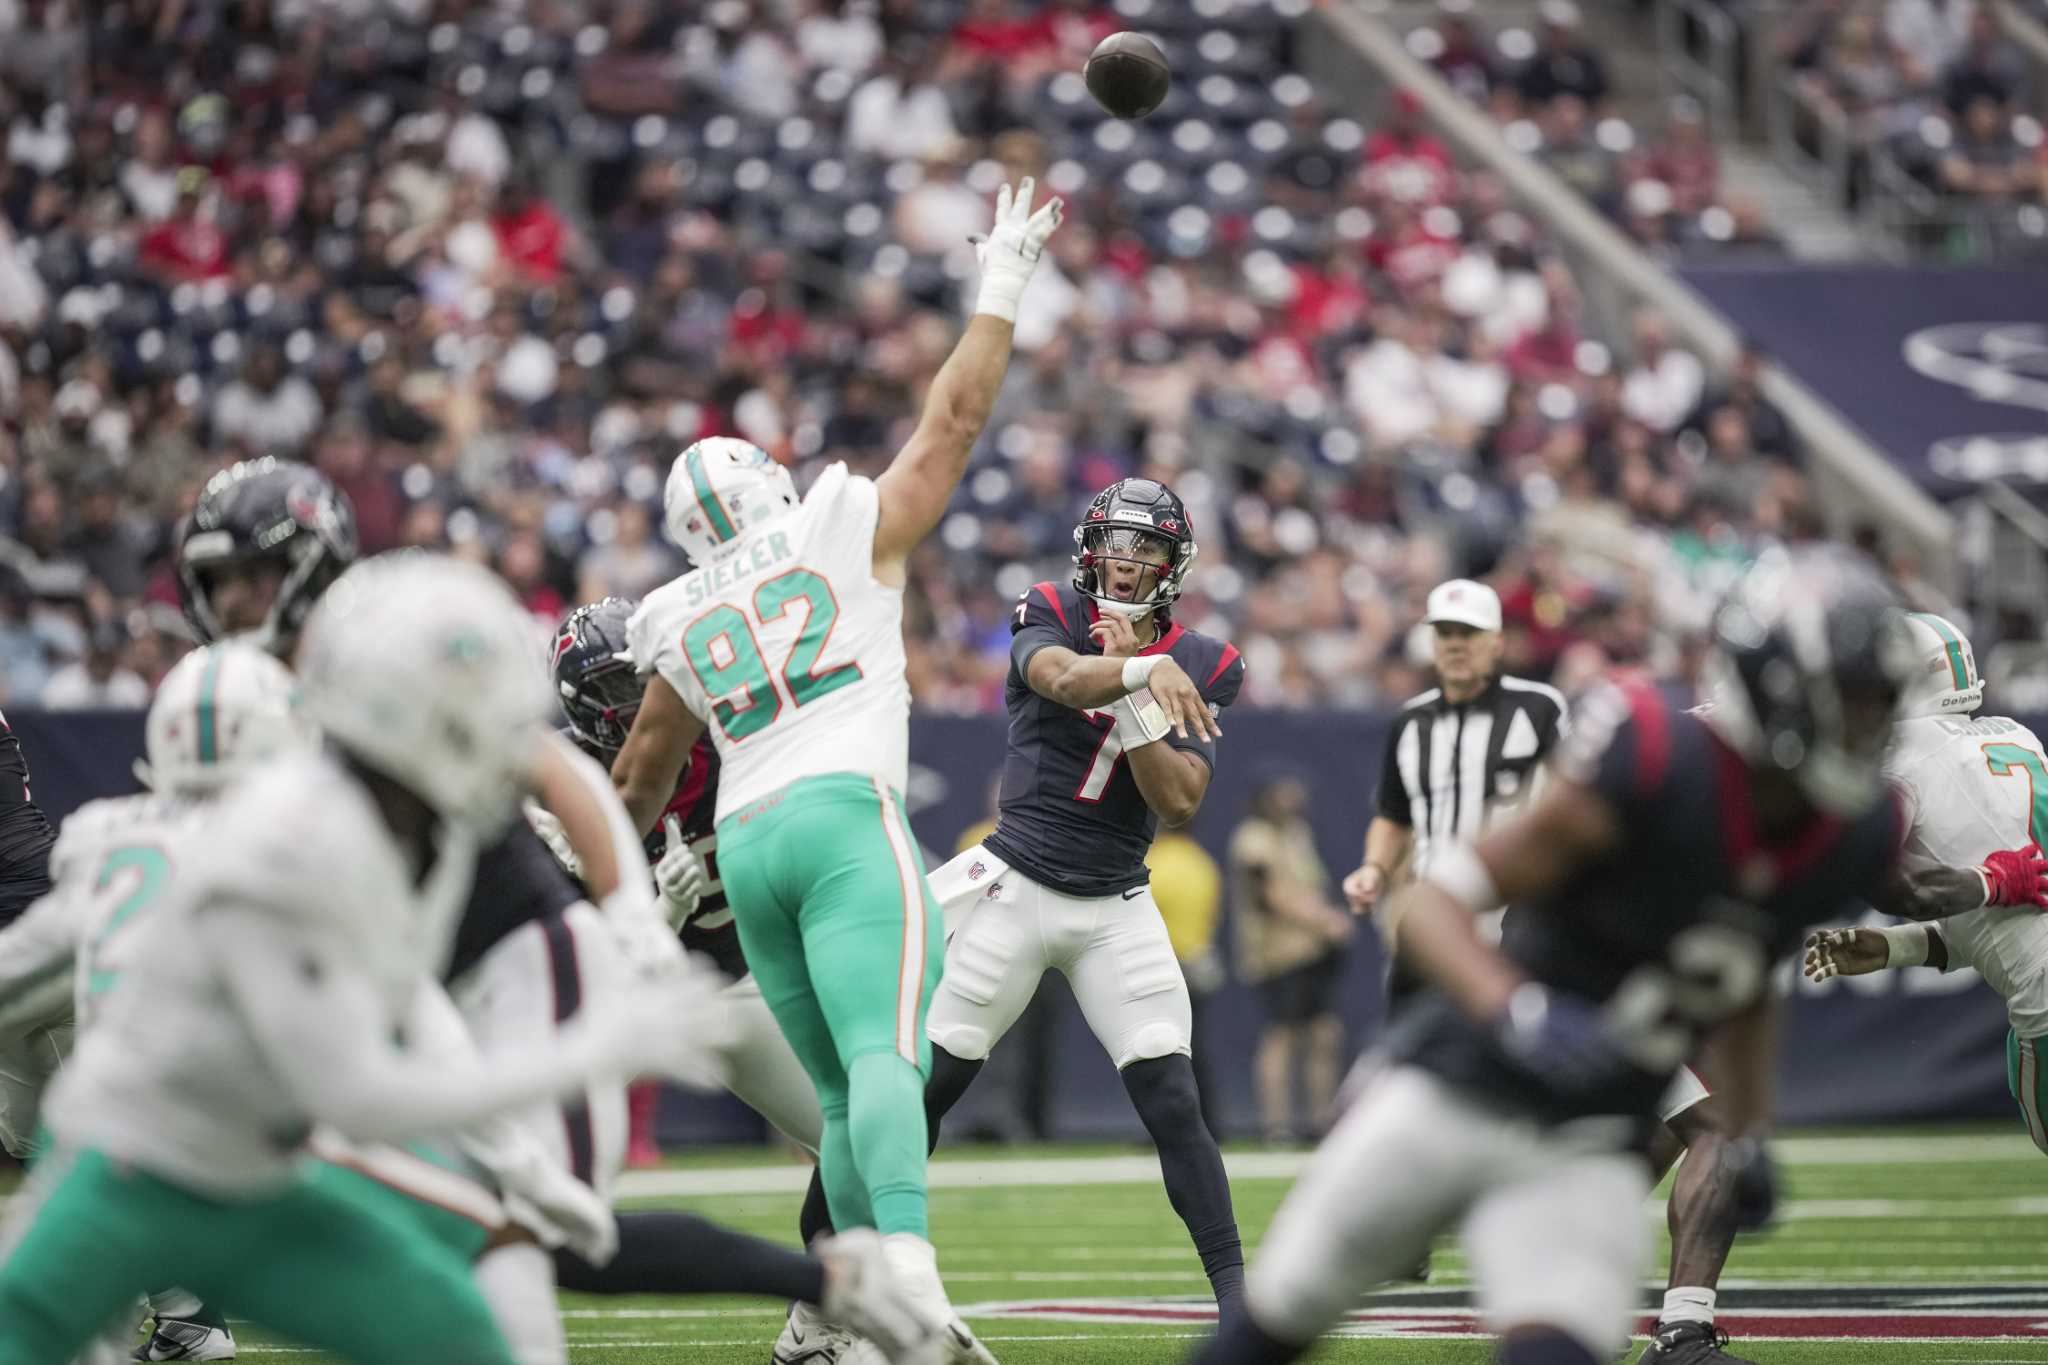 Dolphins vs. Texans live updates, NFL preseason game analysis